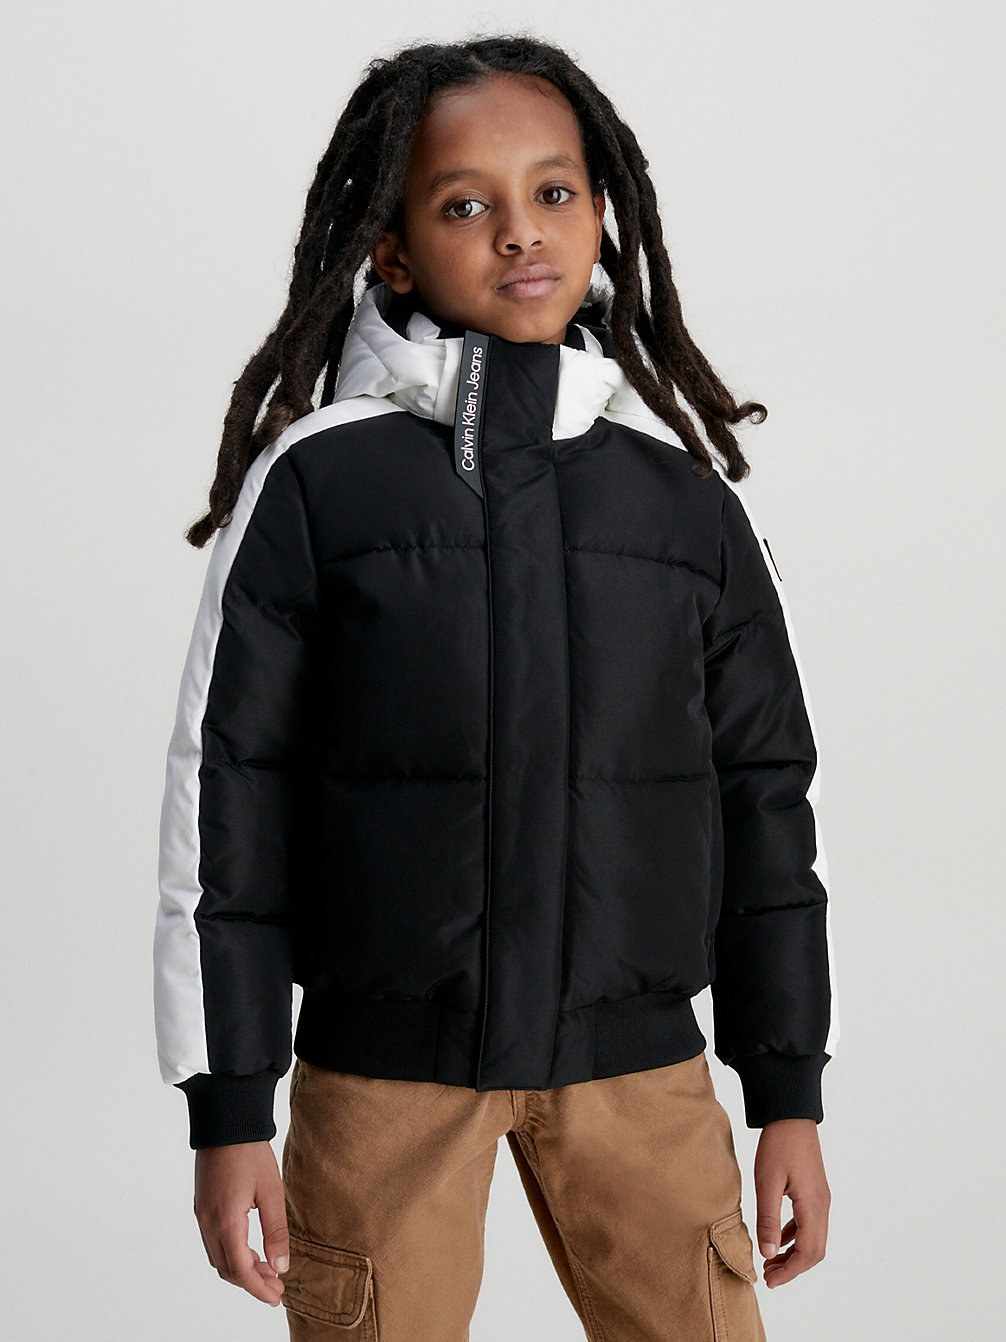 CK BLACK/ BRIGHT WHITE Colourblock Puffer Jacket undefined boys Calvin Klein